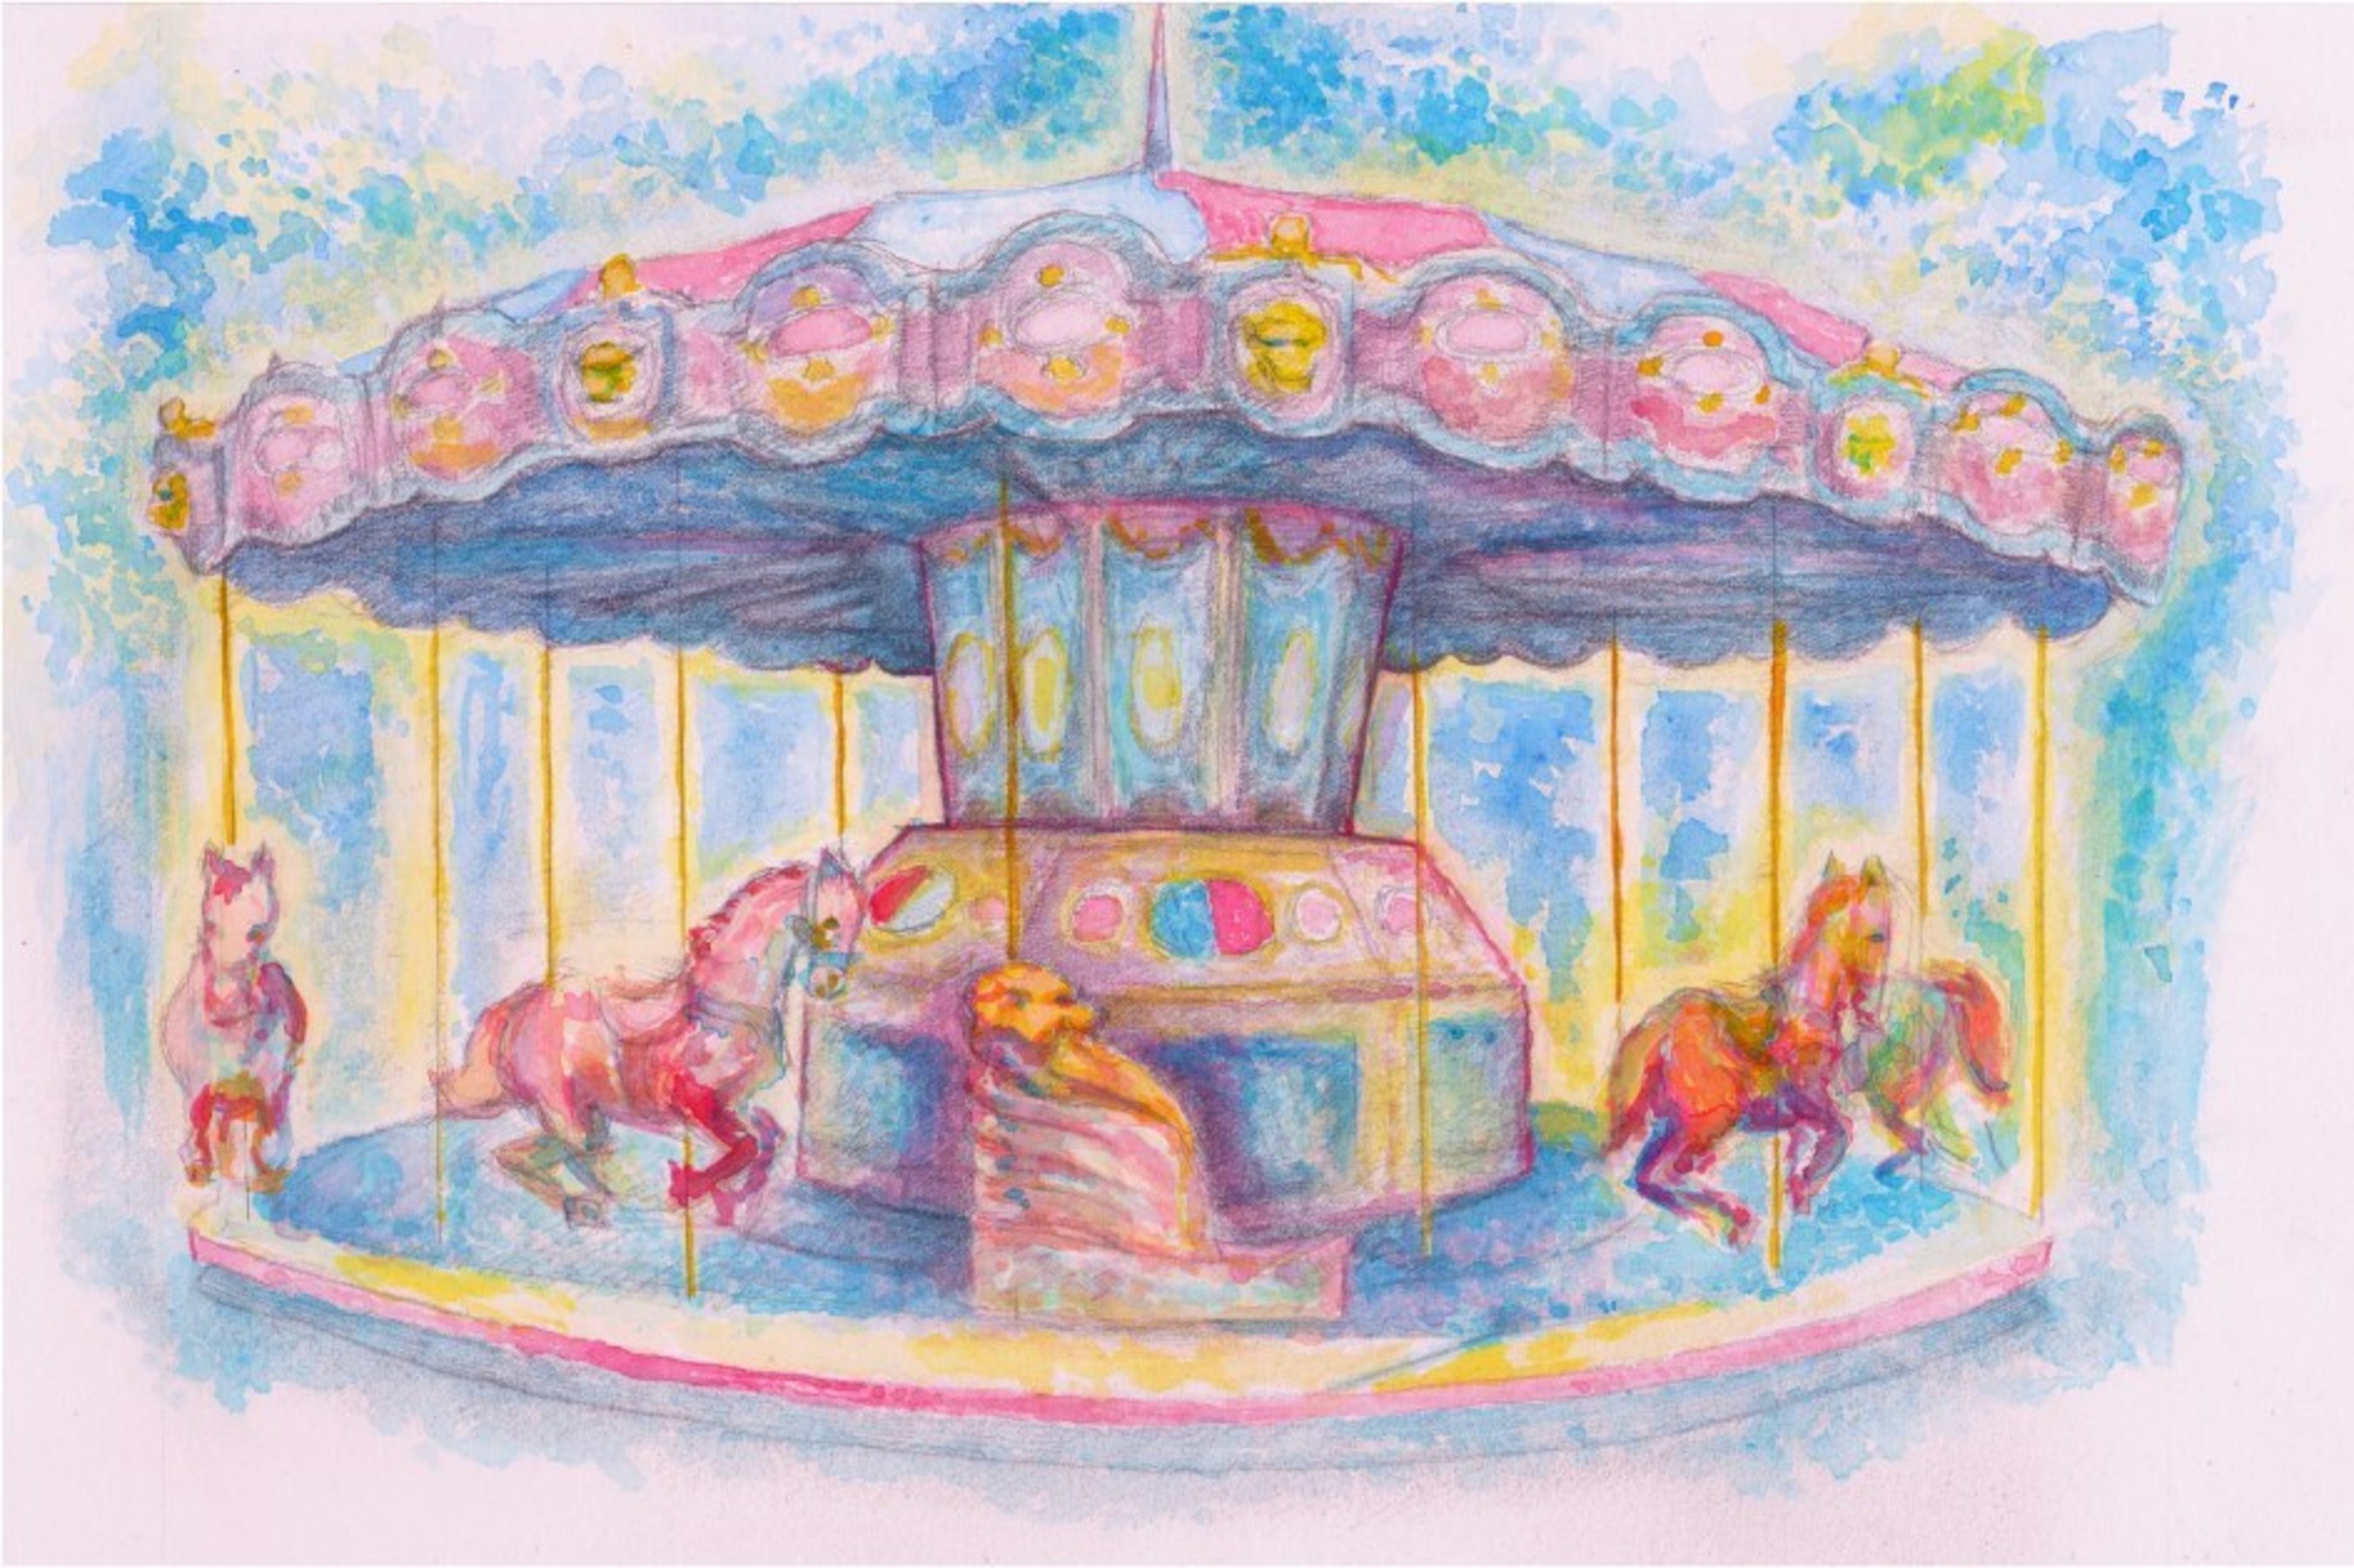 Denver Pavilions Holiday Carousel runs Dec. 12-21. Art by Daniel Crosier.